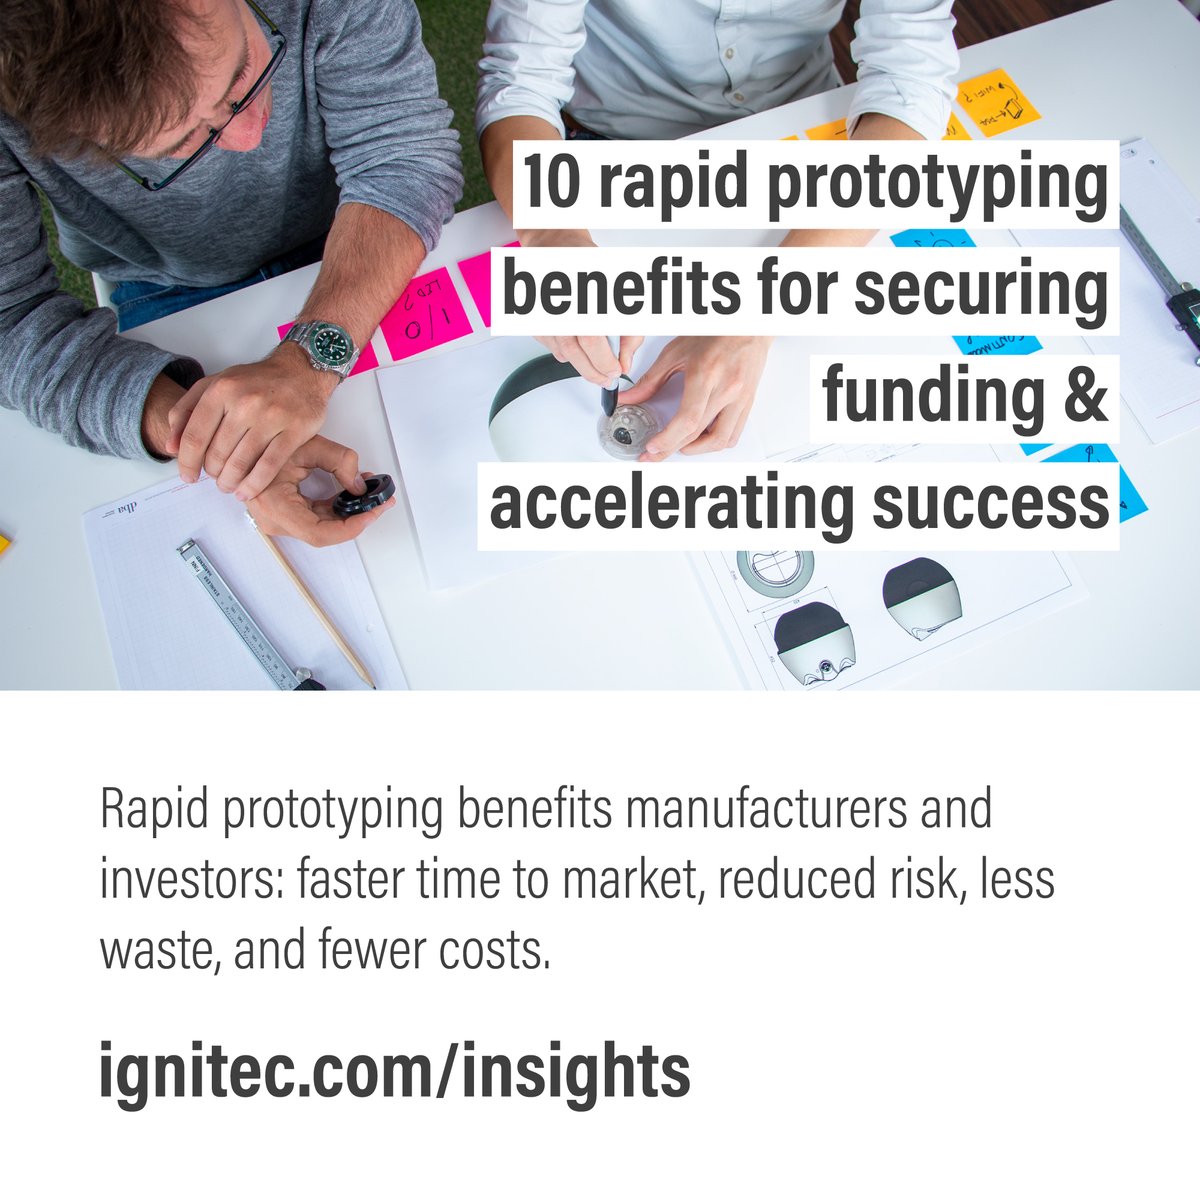 𝗥𝗮𝗽𝗶𝗱 𝗽𝗿𝗼𝘁𝗼𝘁𝘆𝗽𝗶𝗻𝗴 𝗯𝗲𝗻𝗲𝗳𝗶𝘁𝘀 𝗺𝗮𝗻𝘂𝗳𝗮𝗰𝘁𝘂𝗿𝗲𝗿𝘀 𝗮𝗻𝗱 𝗶𝗻𝘃𝗲𝘀𝘁𝗼𝗿𝘀: 𝗳𝗮𝘀𝘁𝗲𝗿 𝘁𝗶𝗺𝗲 𝘁𝗼 𝗺𝗮𝗿𝗸𝗲𝘁, 𝗿𝗲𝗱𝘂𝗰𝗲𝗱 𝗿𝗶𝘀𝗸, 𝗹𝗲𝘀𝘀 𝘄𝗮𝘀𝘁𝗲, 𝗮𝗻𝗱 𝗳𝗲𝘄𝗲𝗿 𝗰𝗼𝘀𝘁𝘀.

ignitec.com/insights/10-ra…

#ProductDesign #RapidPrototyping